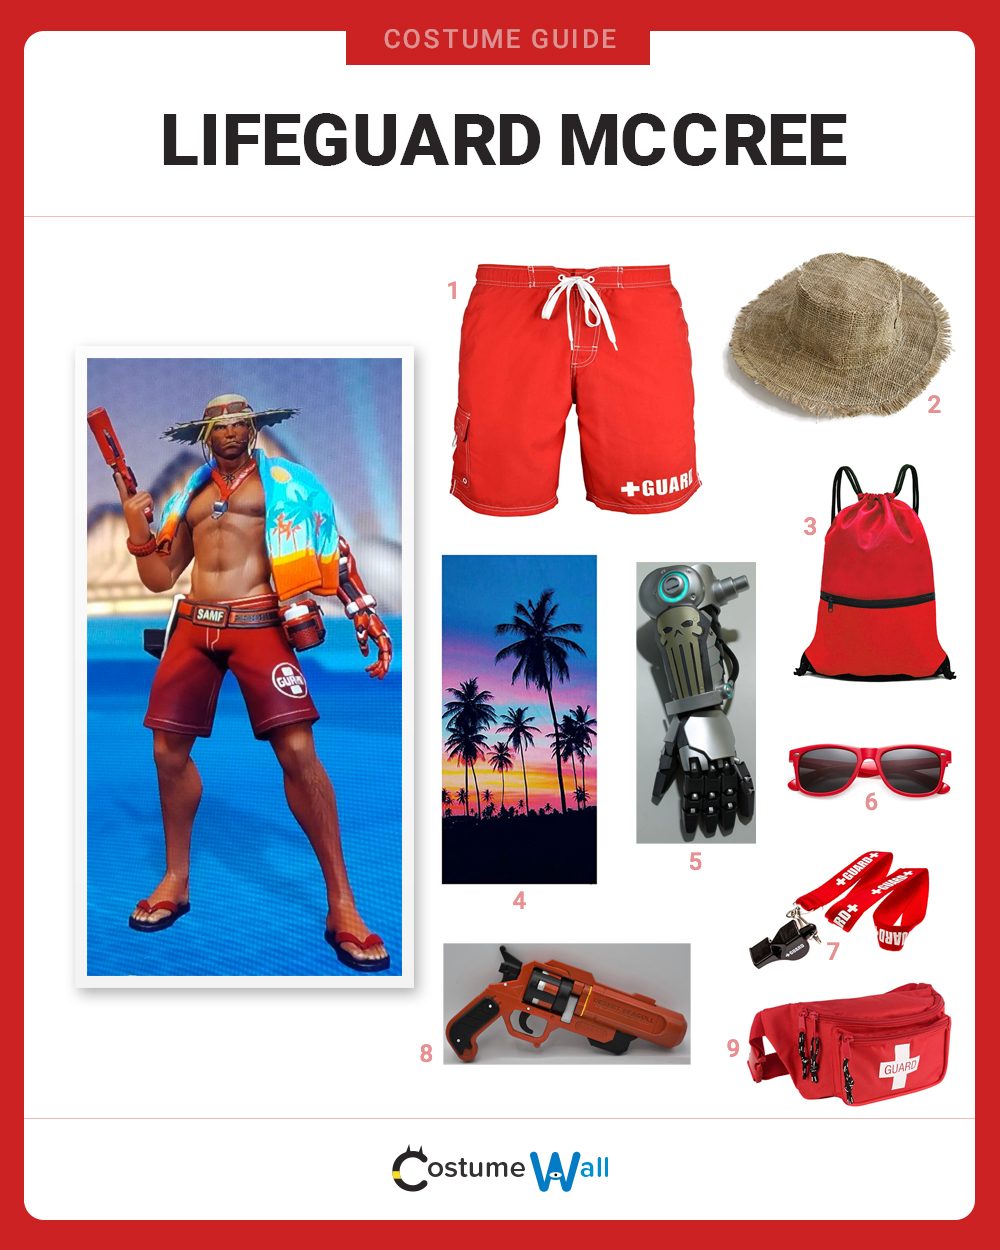 Lifeguard McCree Costume Guide